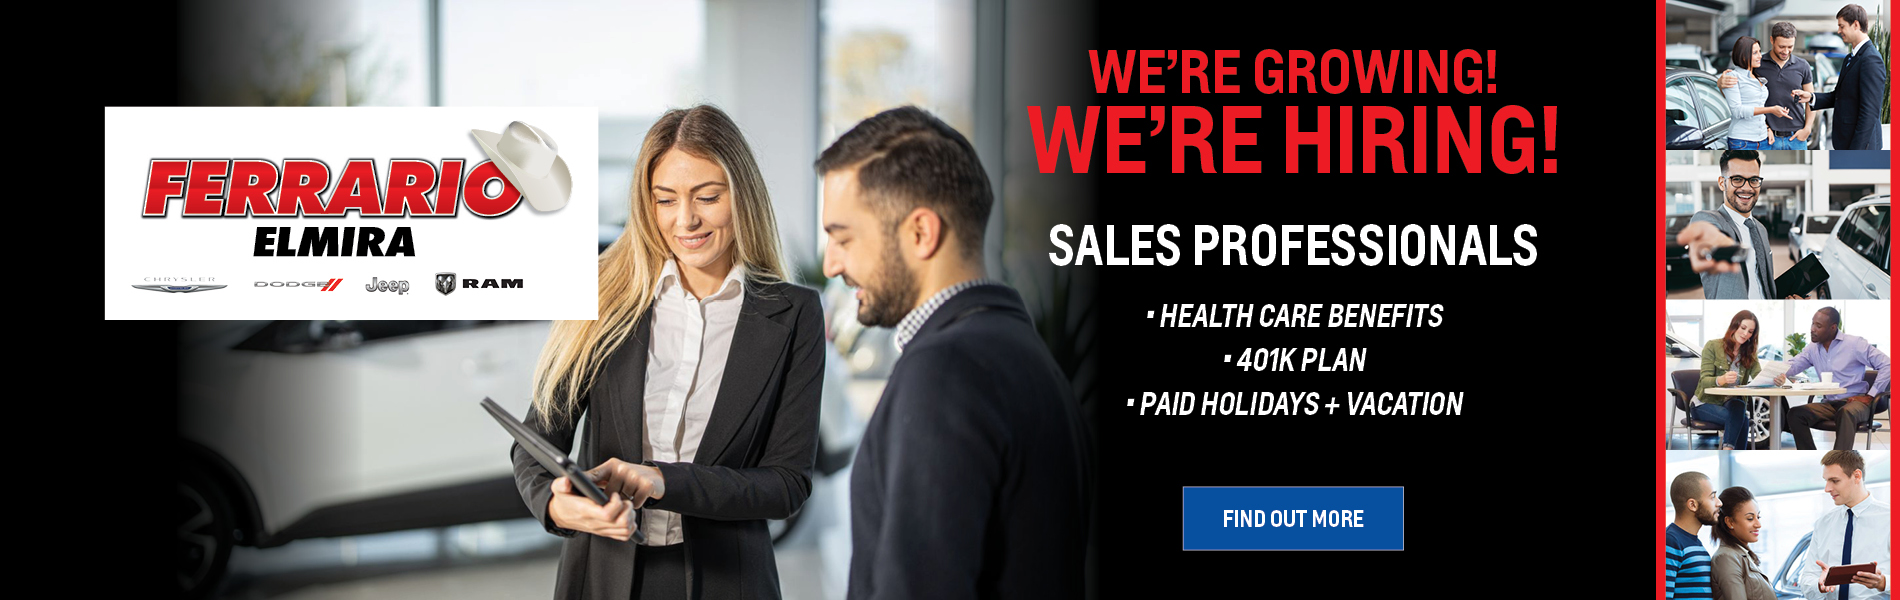 We’re hiring Sales Professionals